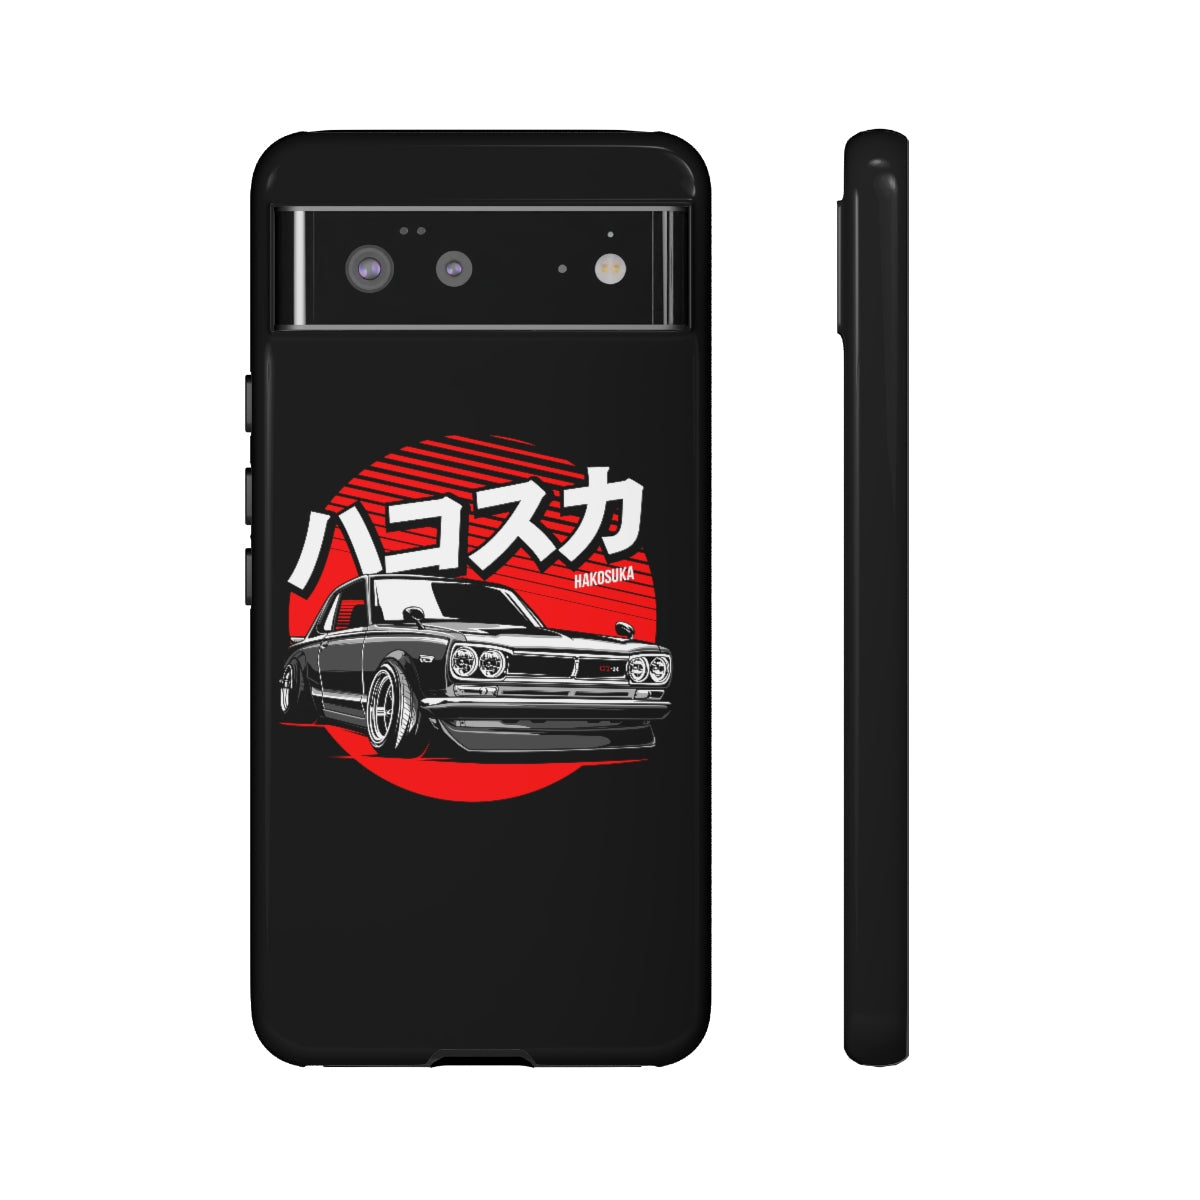 Skyline GTR Hakosuka - Car Phone Case - Google Pixel 6